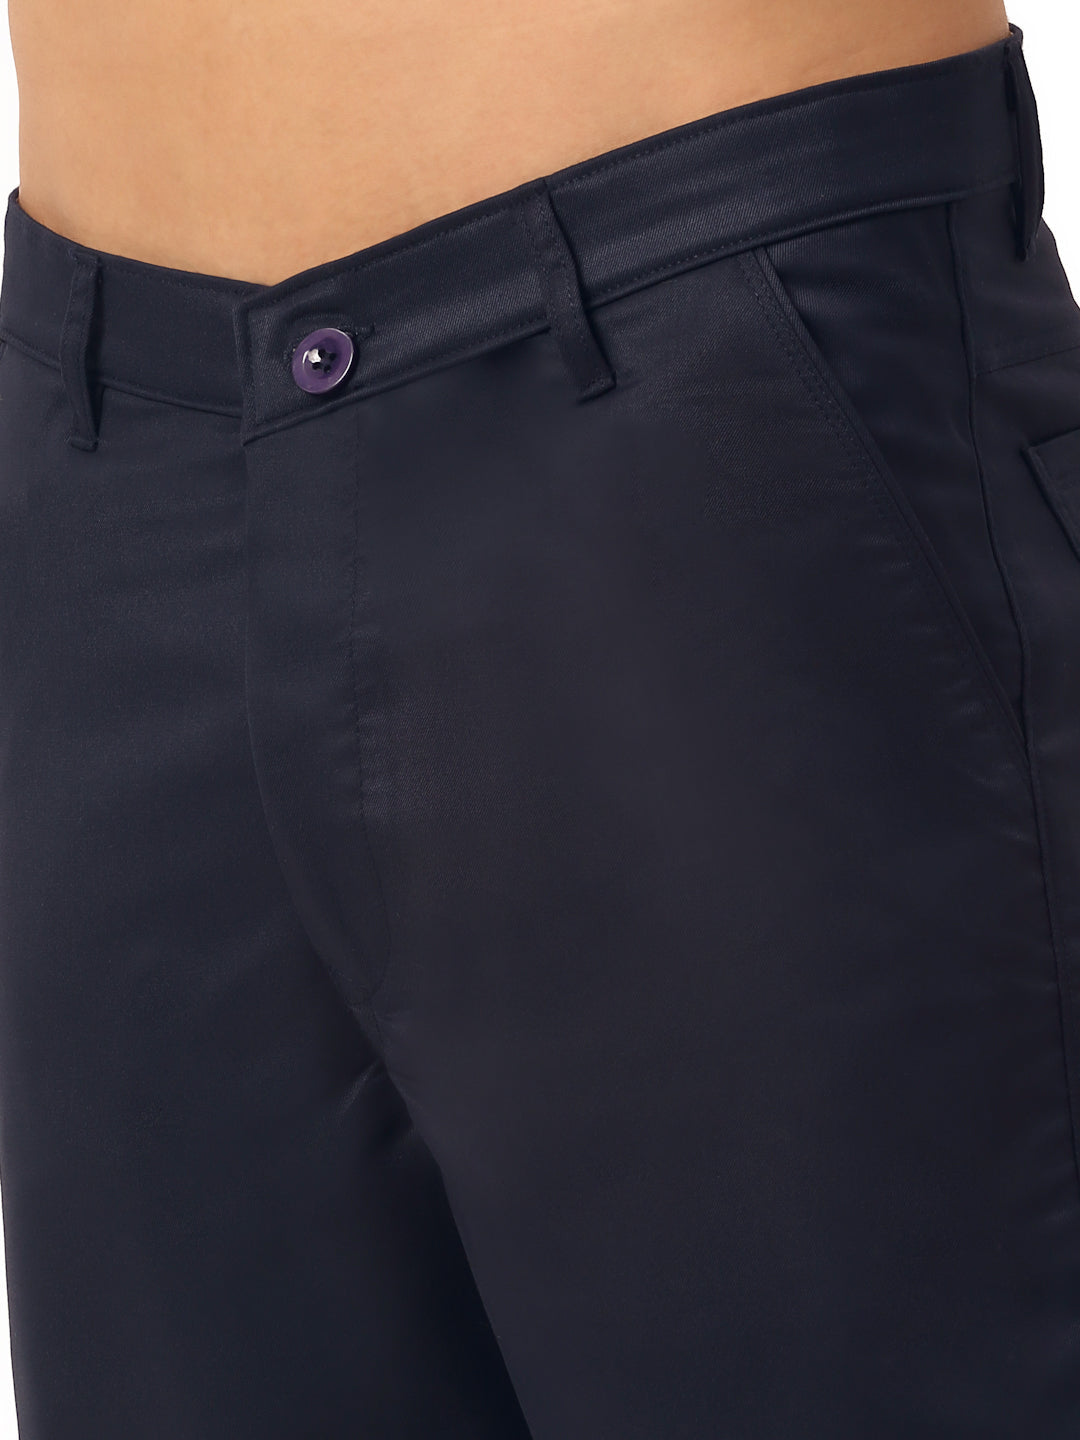 Men's Casual Cotton Solid Shorts ( SGP 153 Navy ) - Jainish